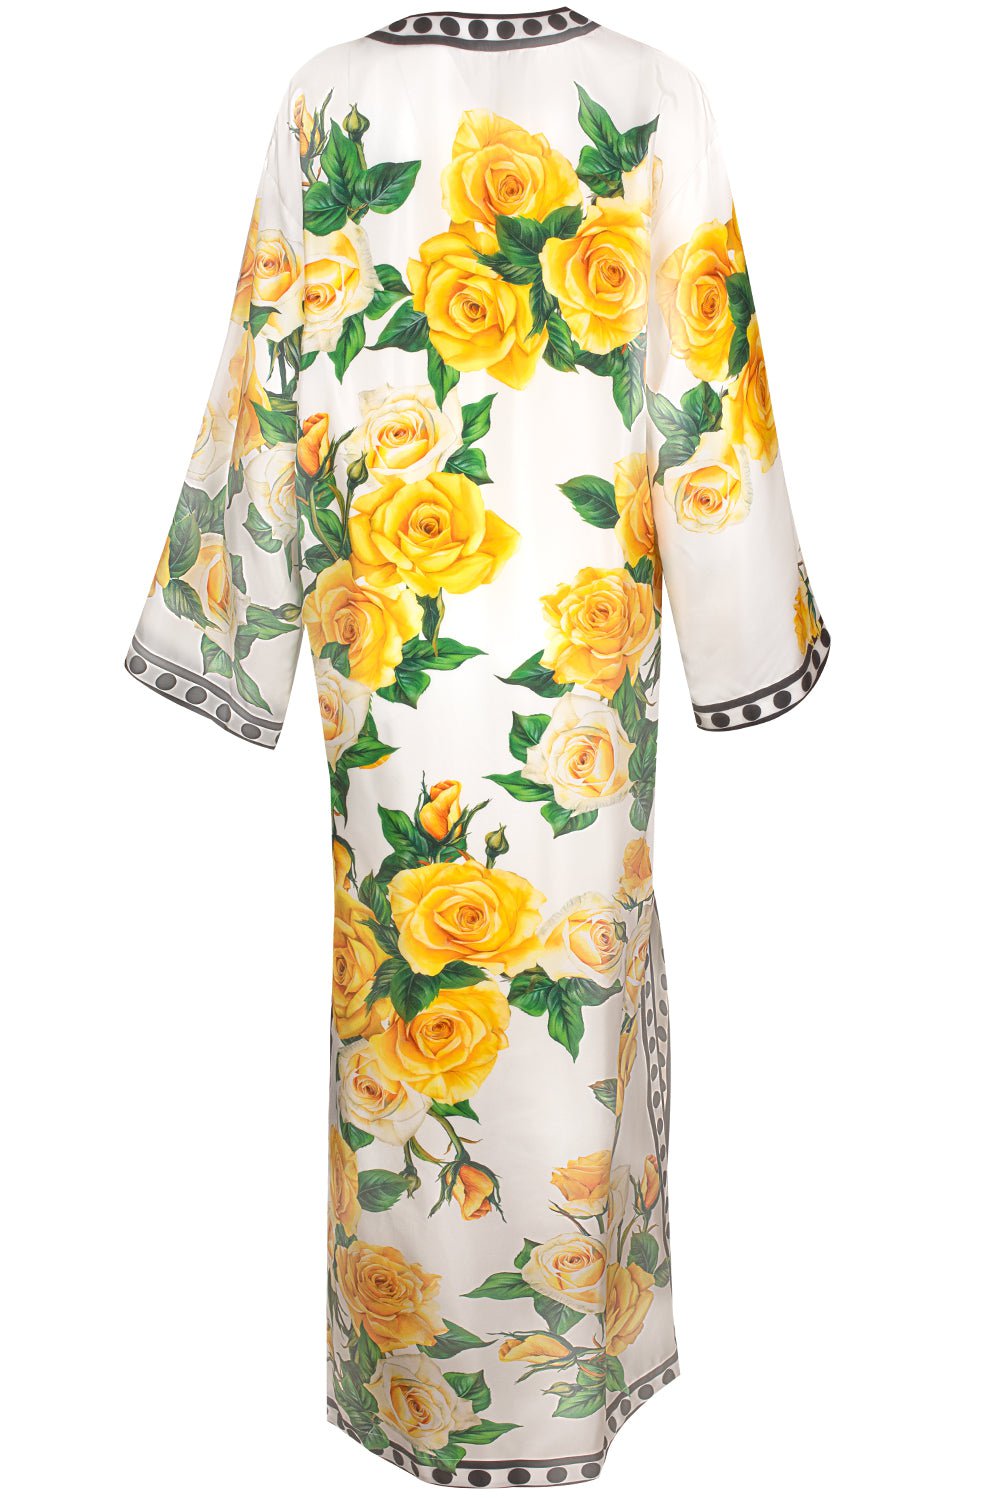 DOLCE & GABBANA-Kimono Sleeve Floral Kaftan-YELLOW ROSE